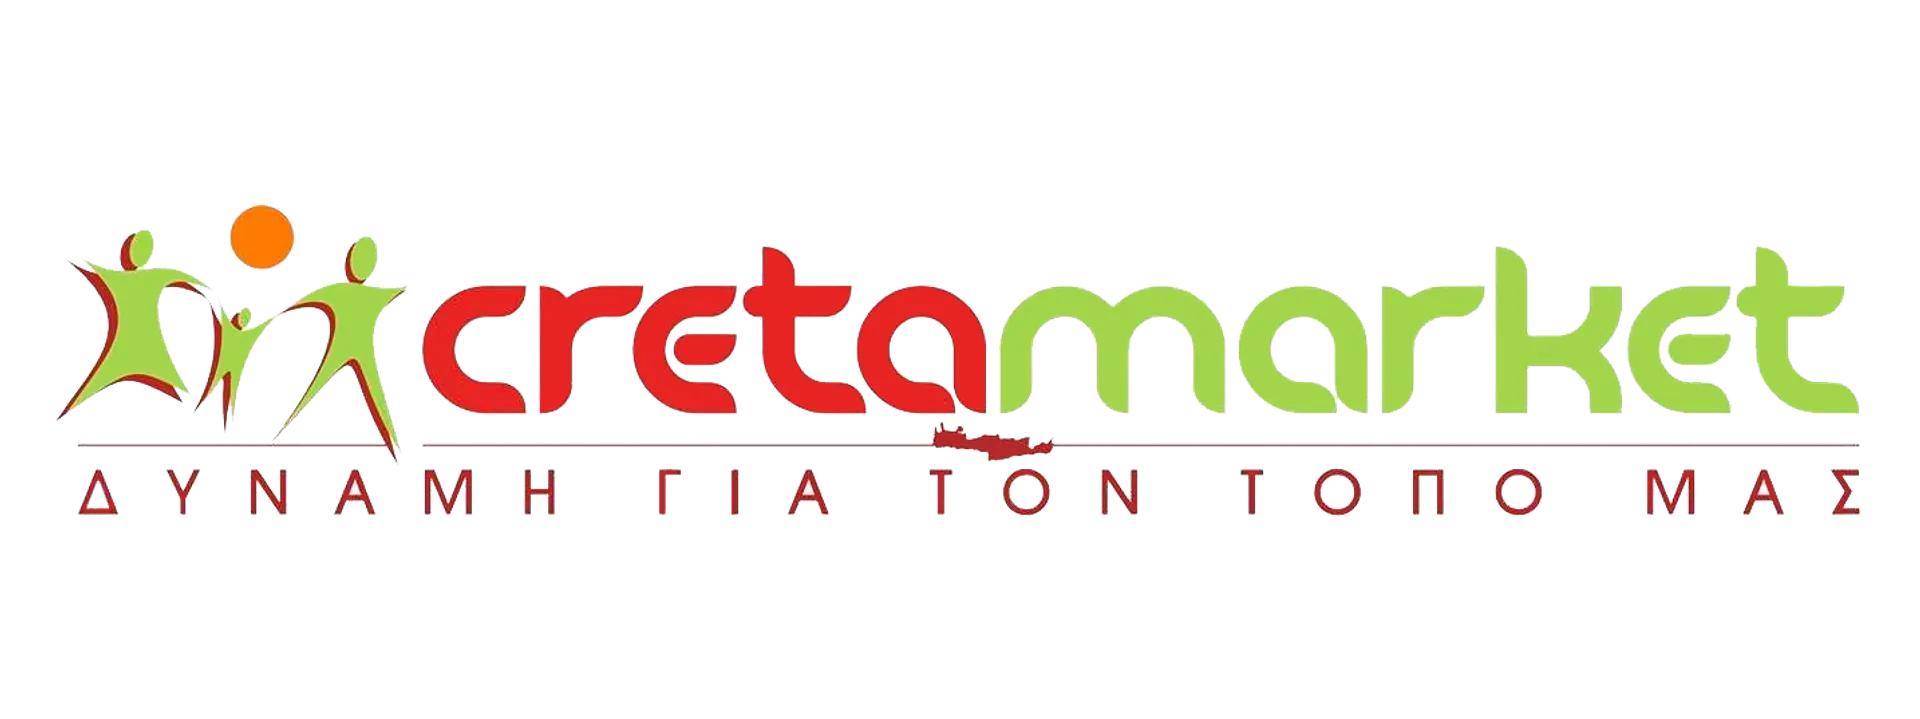 CRETA MARKET logo. Current weekly ad